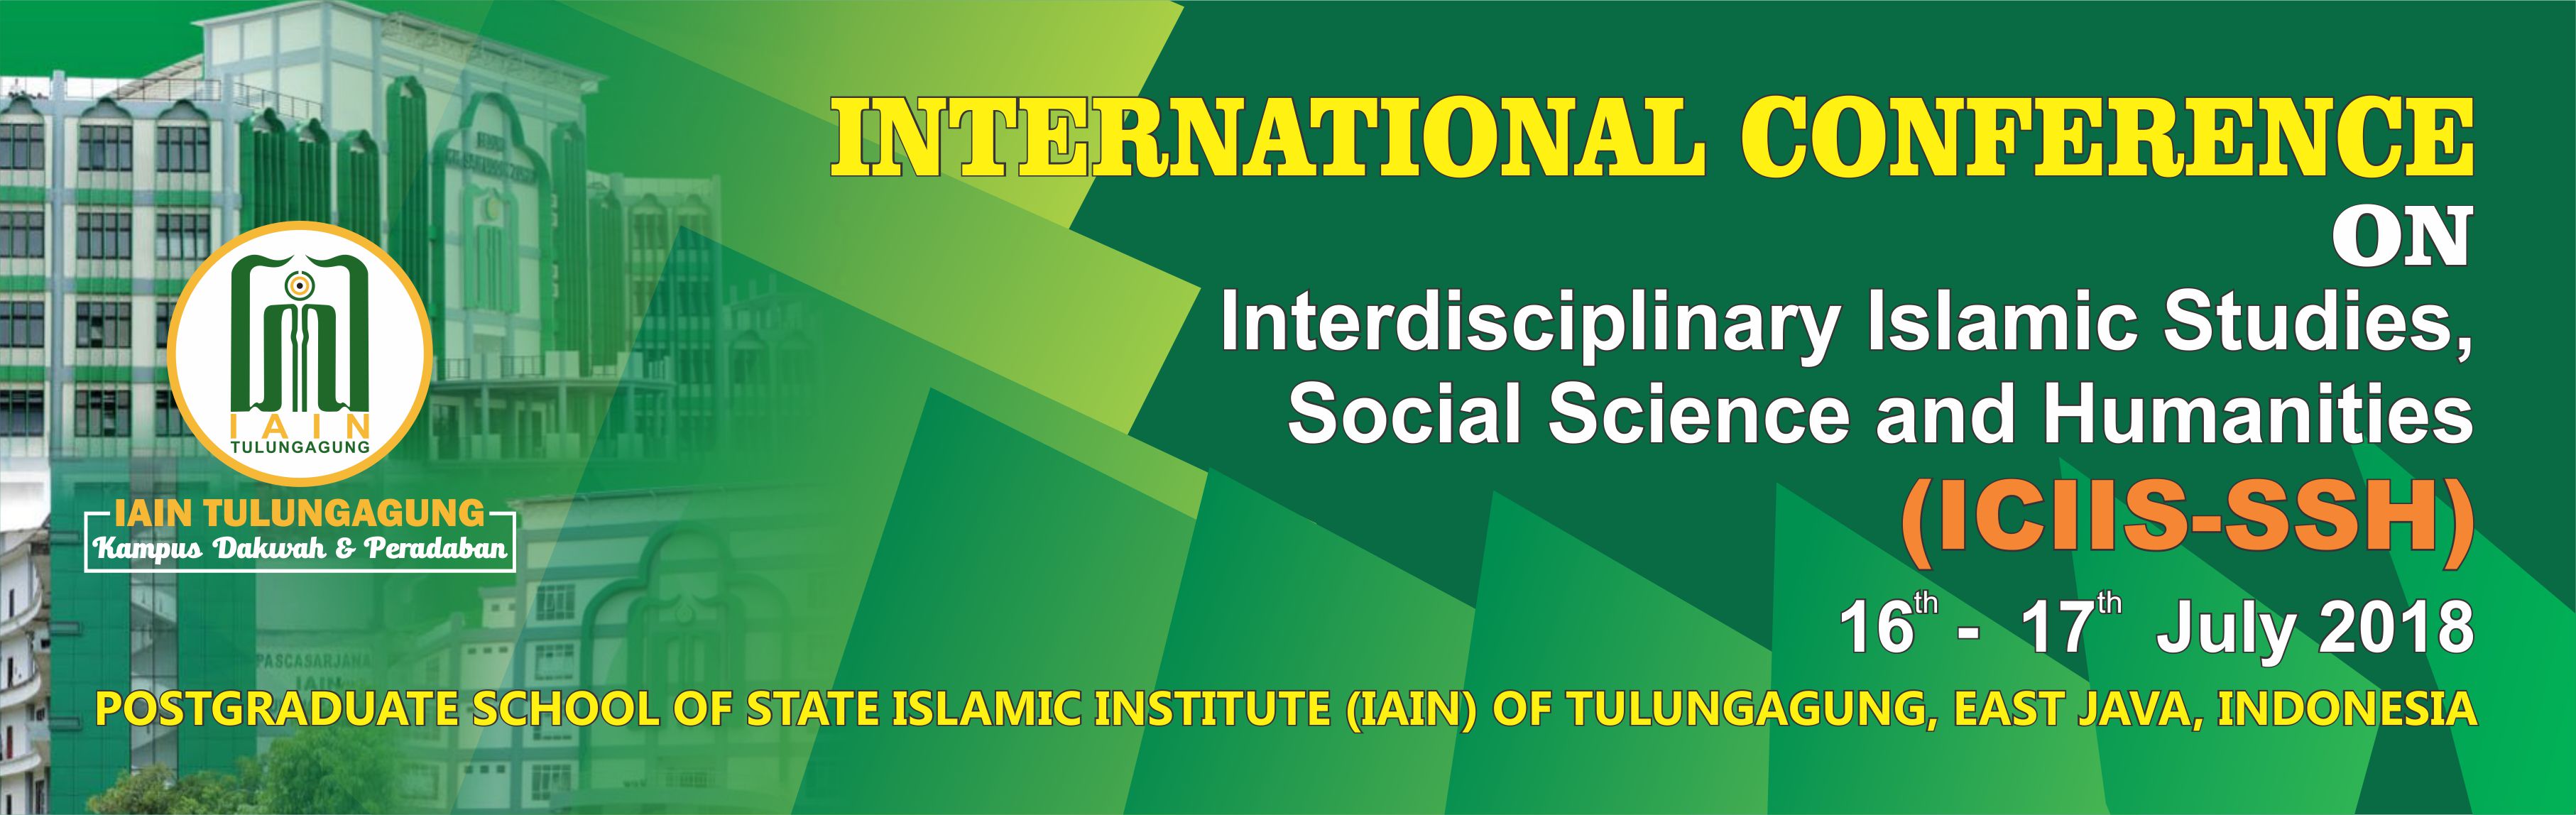 International Conference on Interdisciplinary Islamic Studies, Social Science and Humanities (ICIIS-SSH)